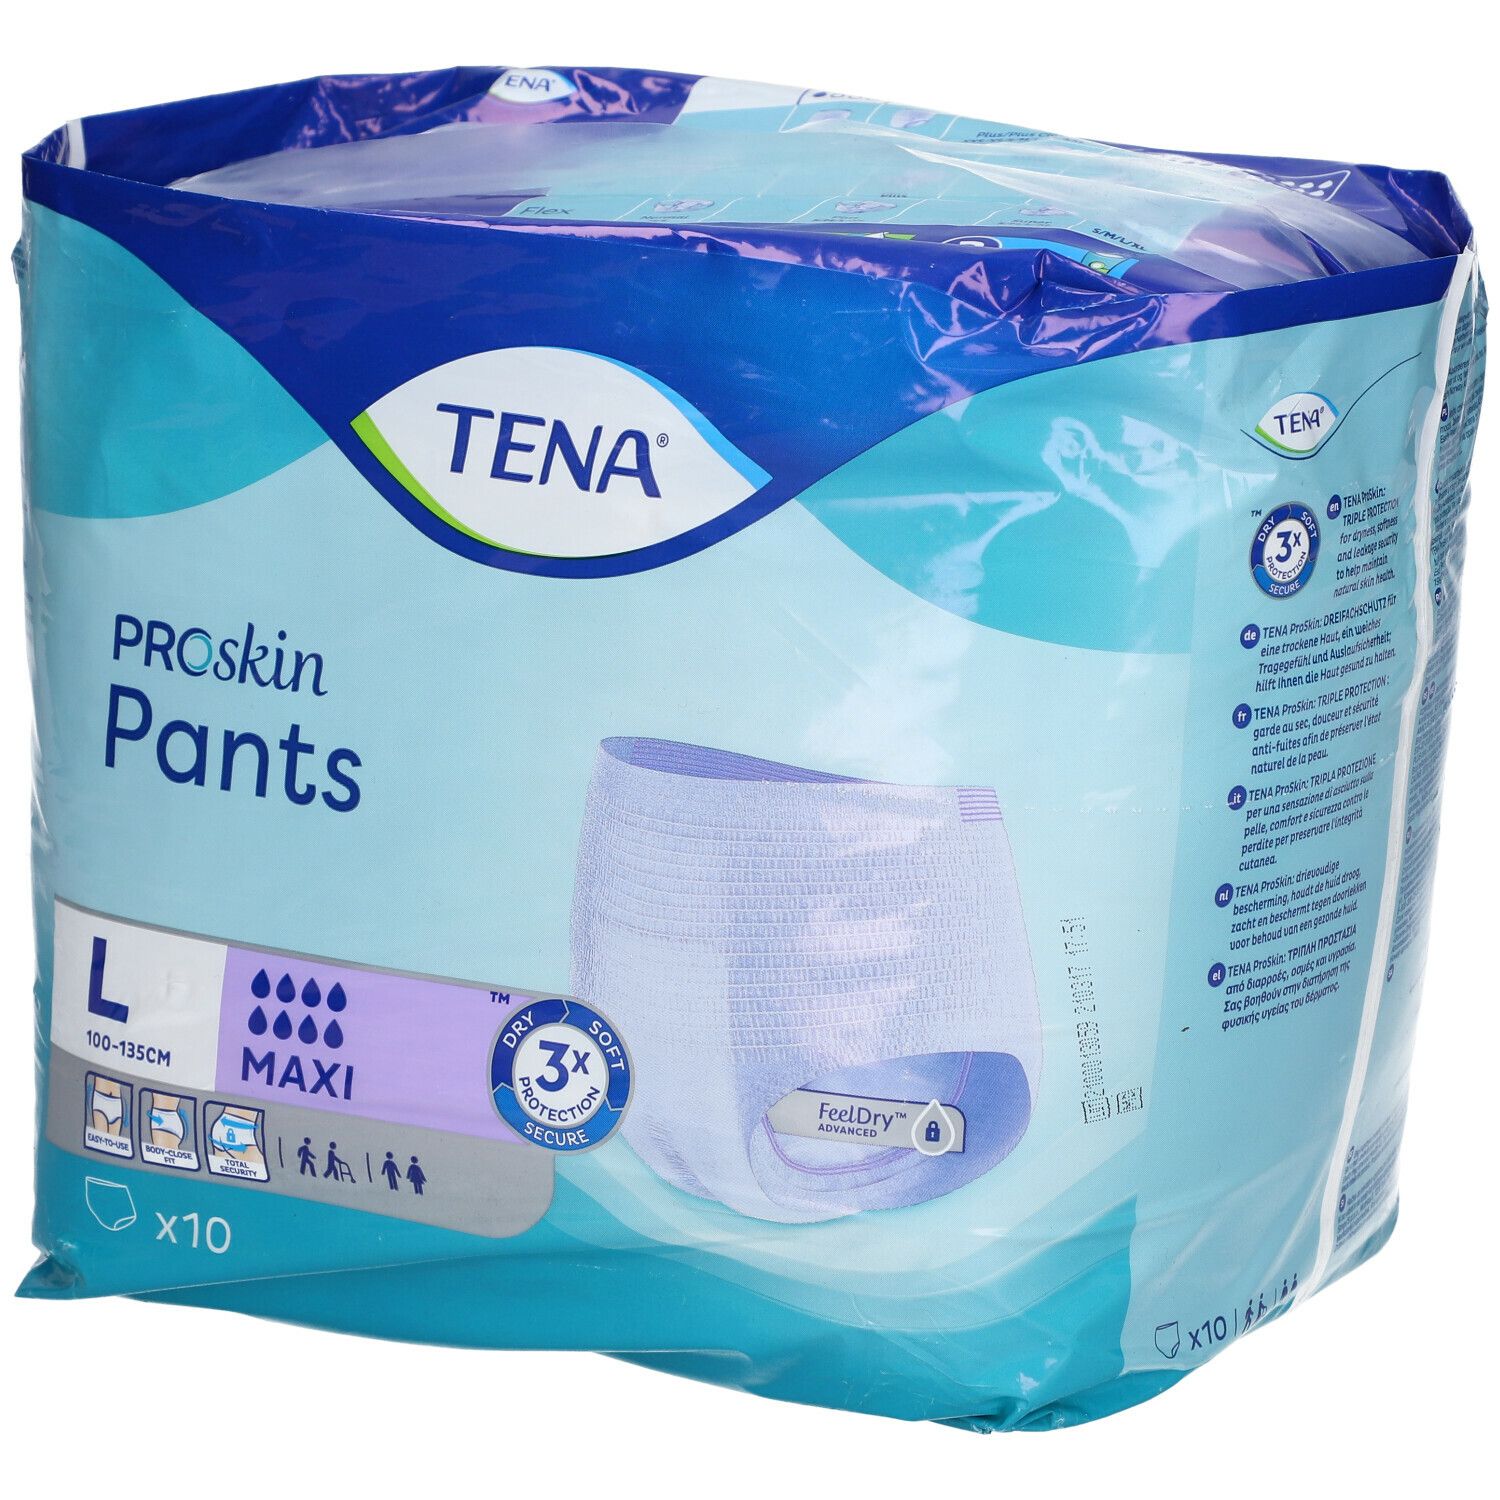 Tena® PROskin Pants Maxi Large